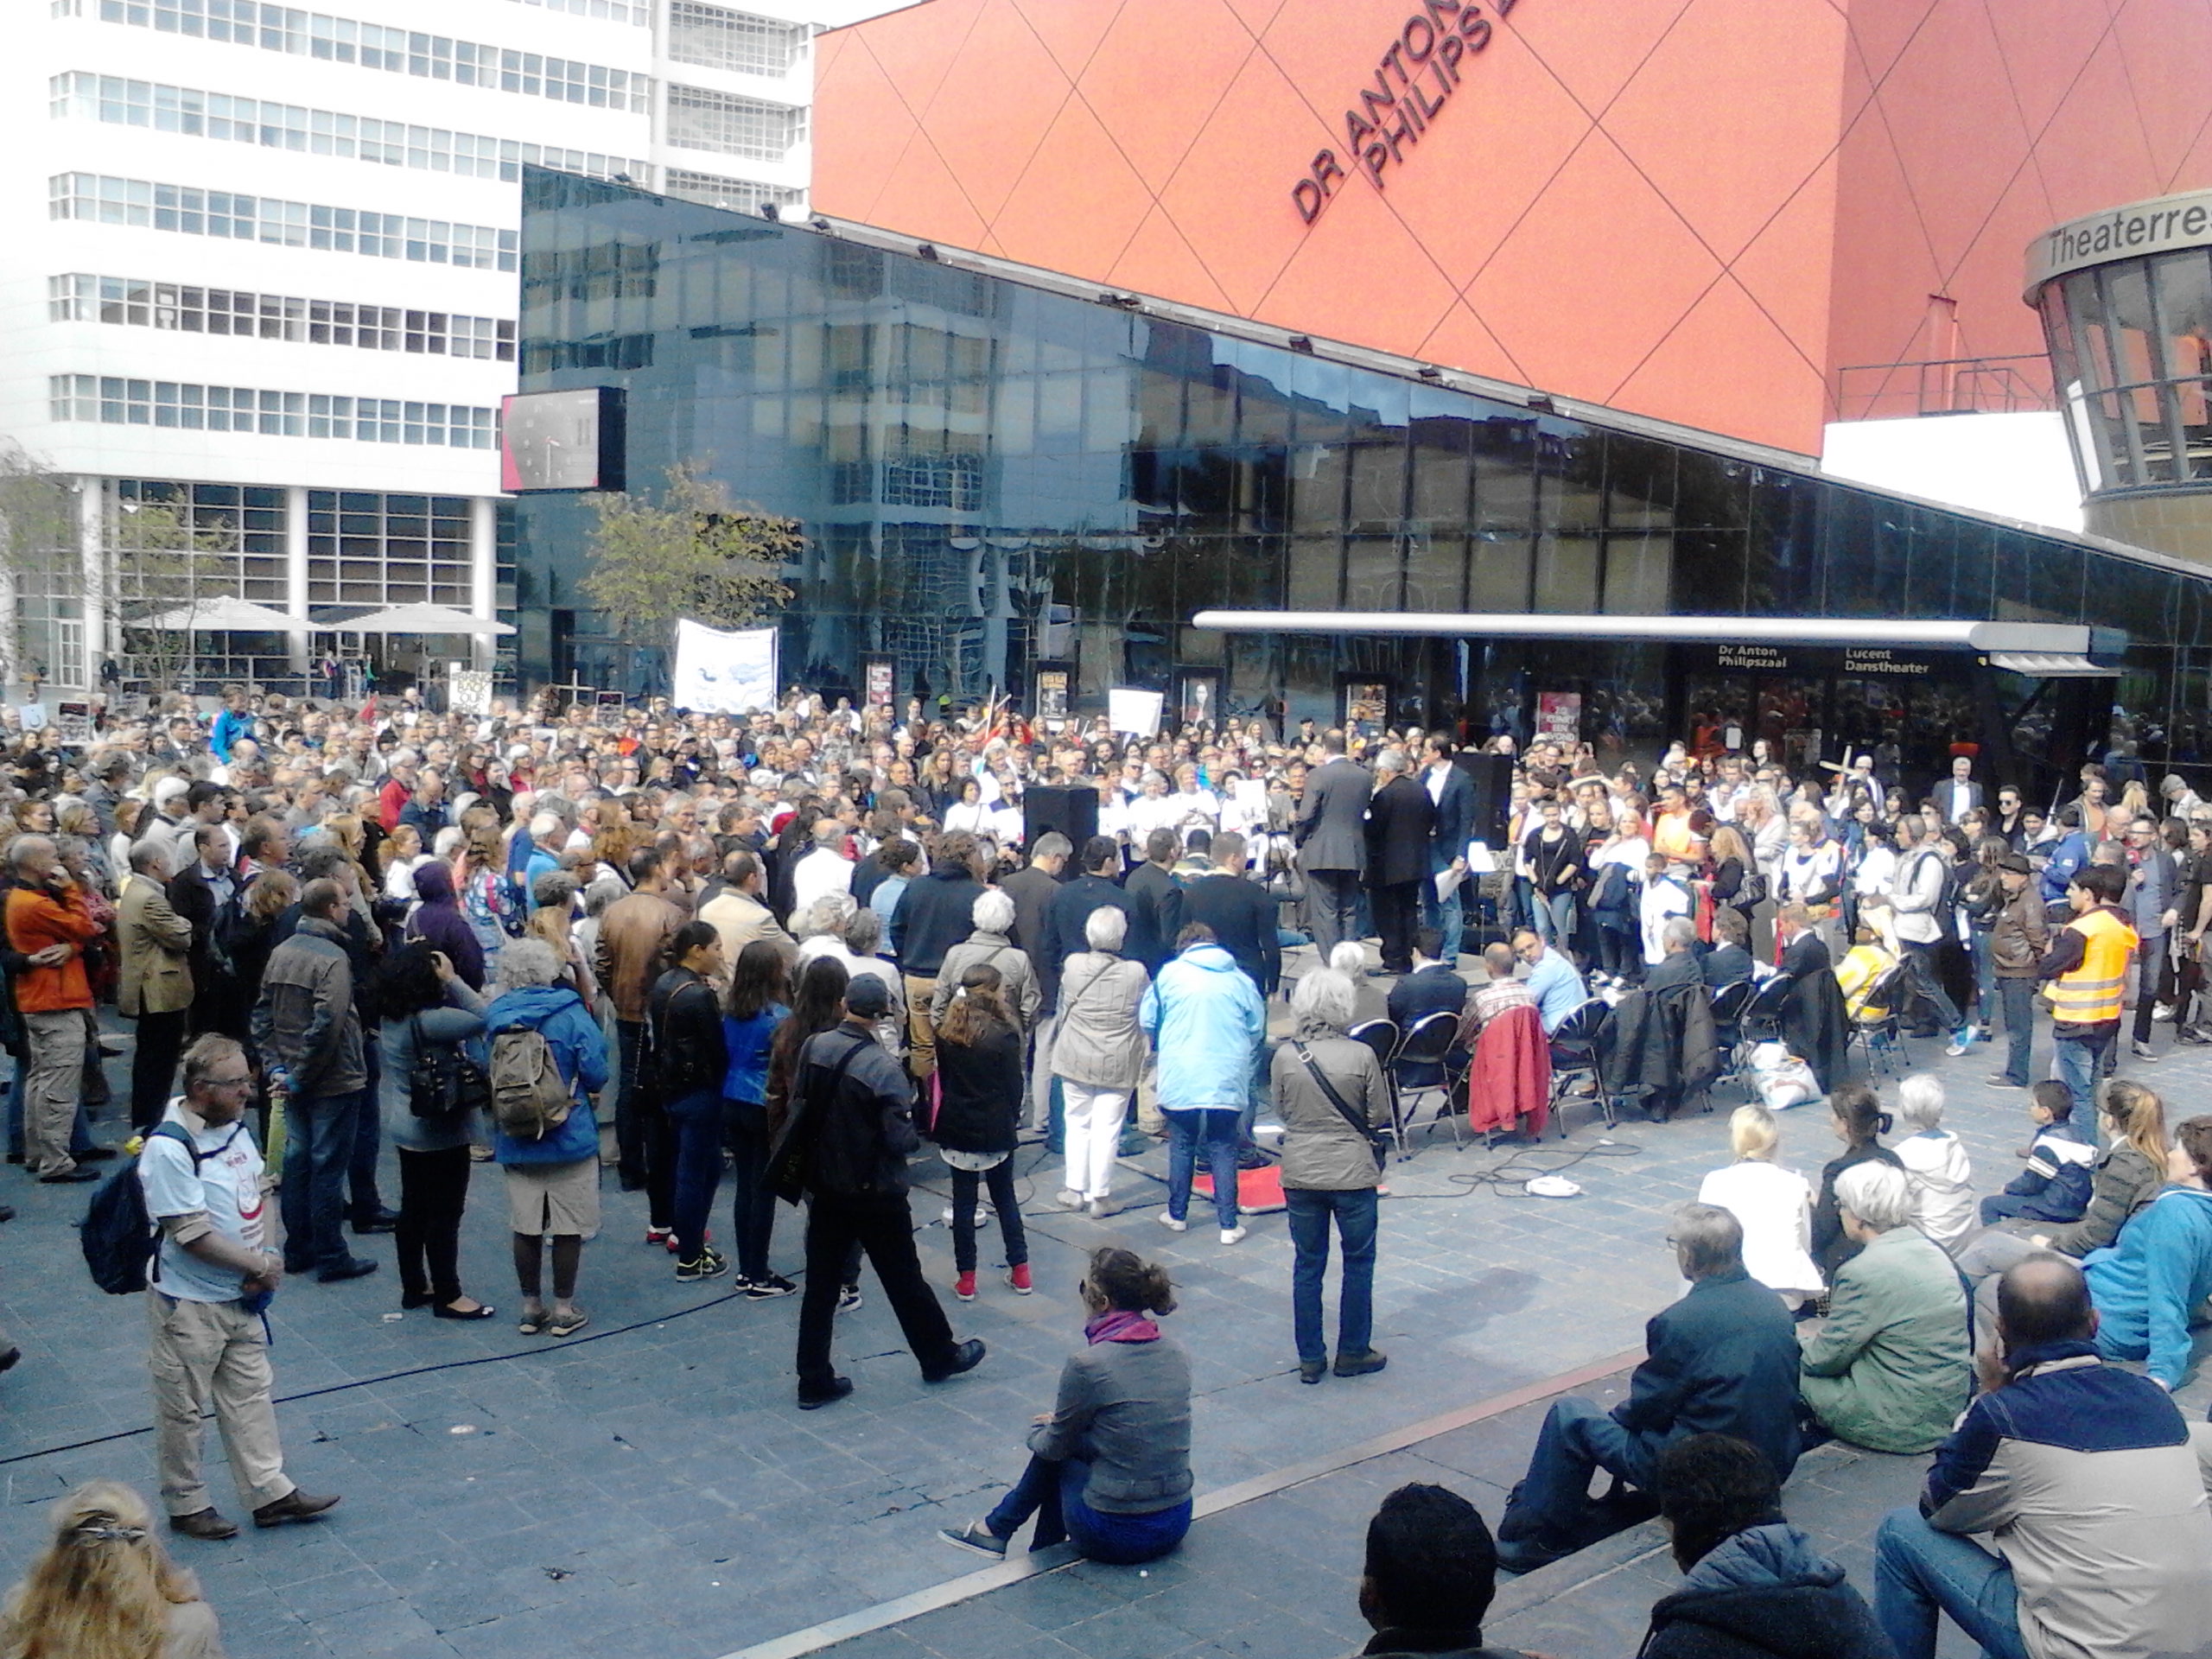 Honderden demonstranten in Den Haag tegen christenvervolging